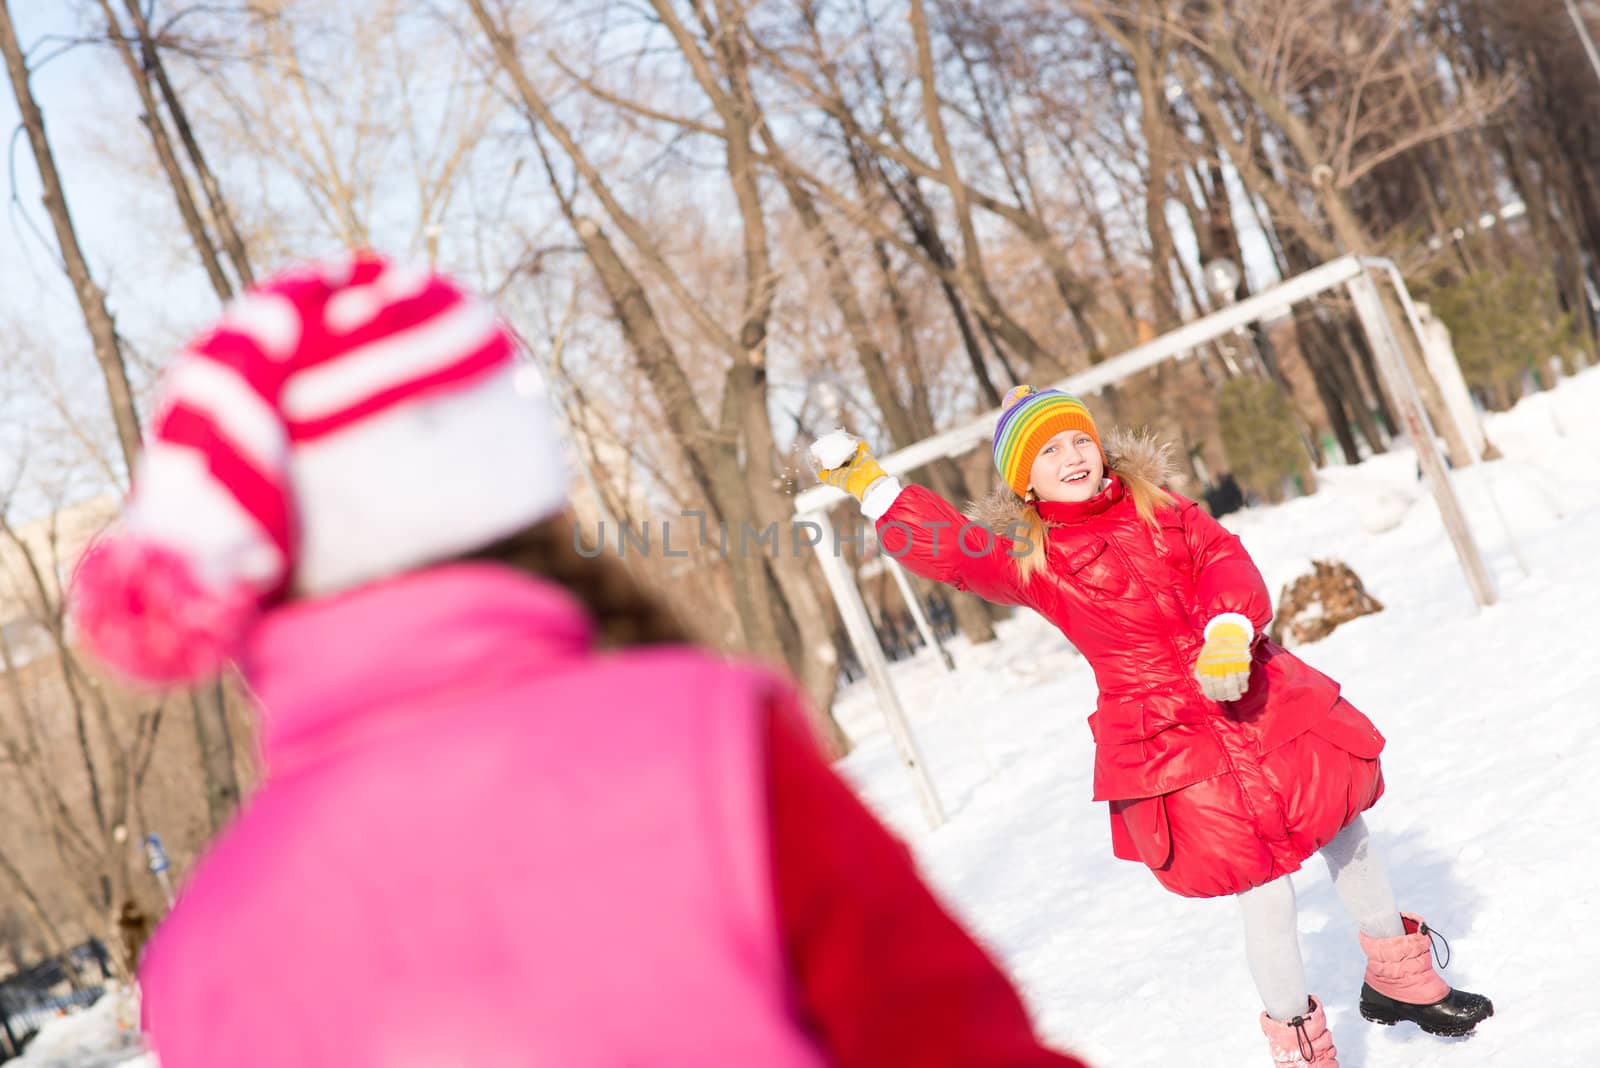 Children in Winter Park playing snowballs by adam121